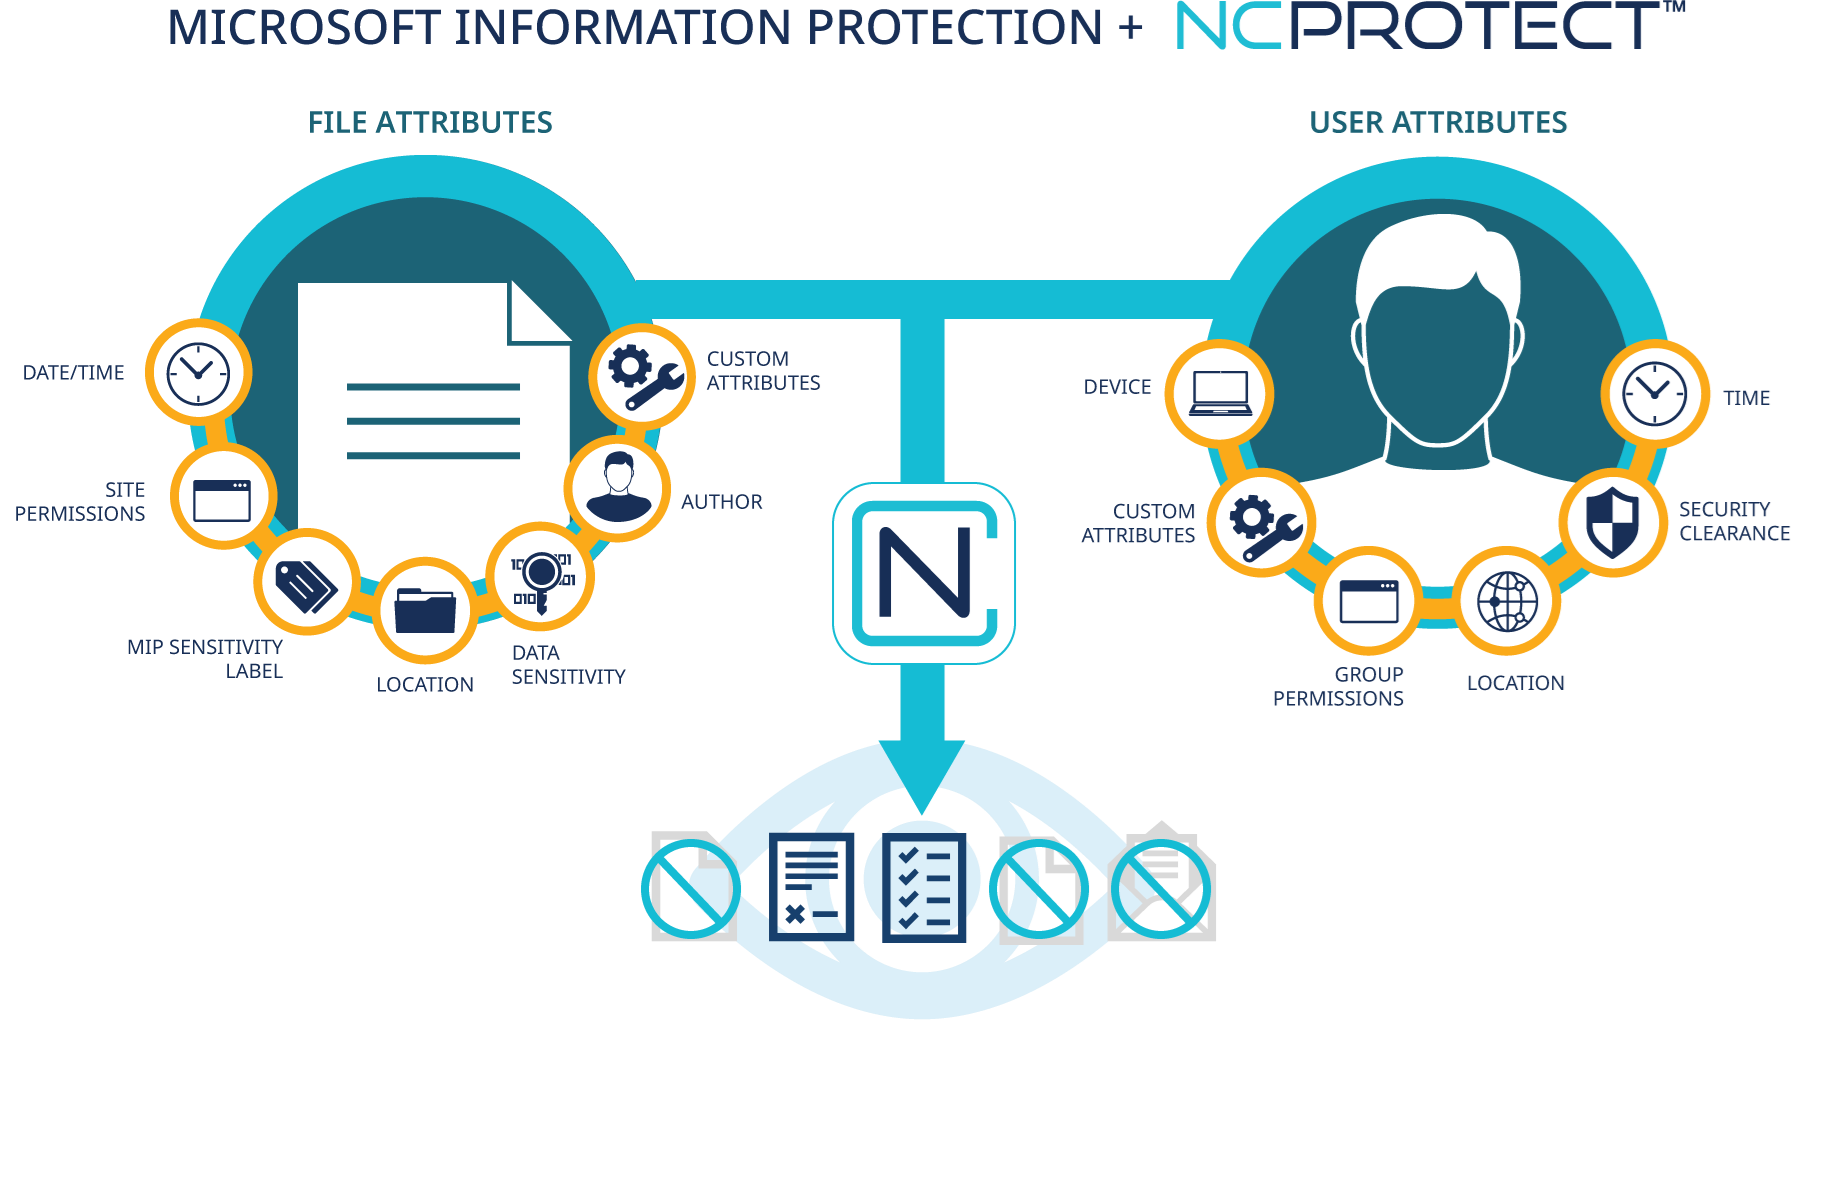 NC Protect および Microsoft Information Protection との統合を示す画像。